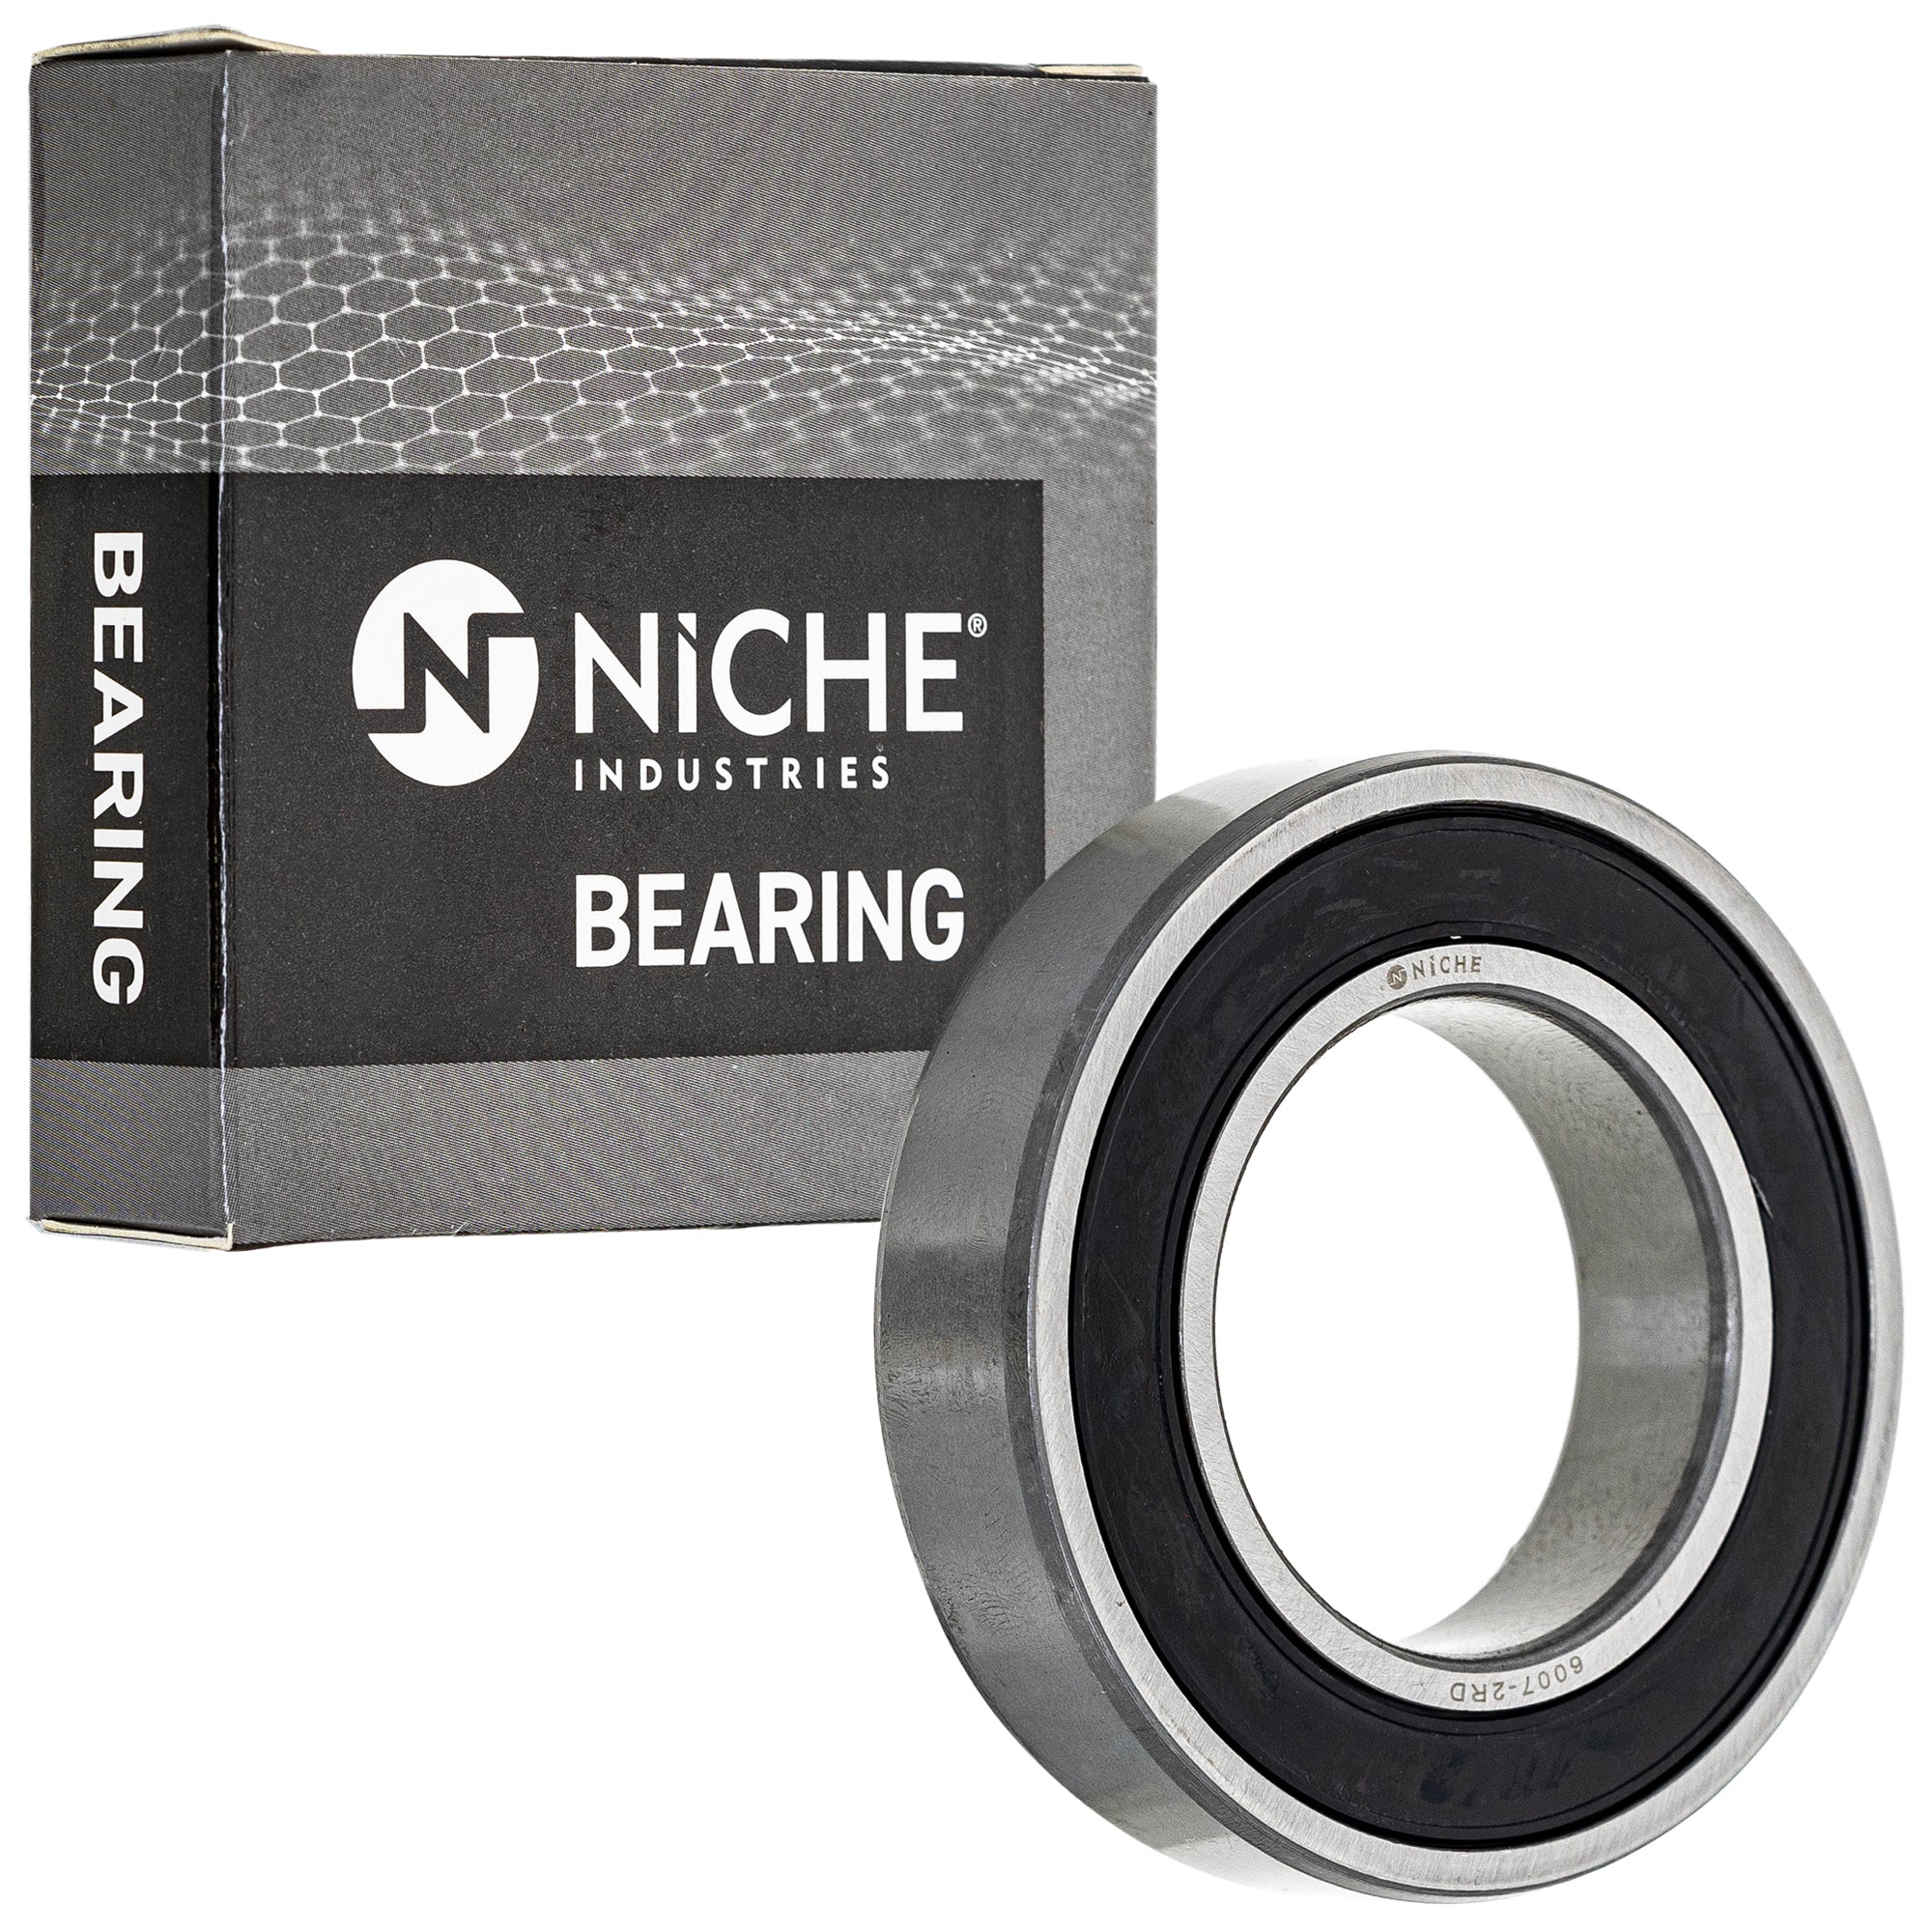 NICHE 519-CBB2274R Bearing & Seal Kit 10-Pack for zOTHER Tri Raptor